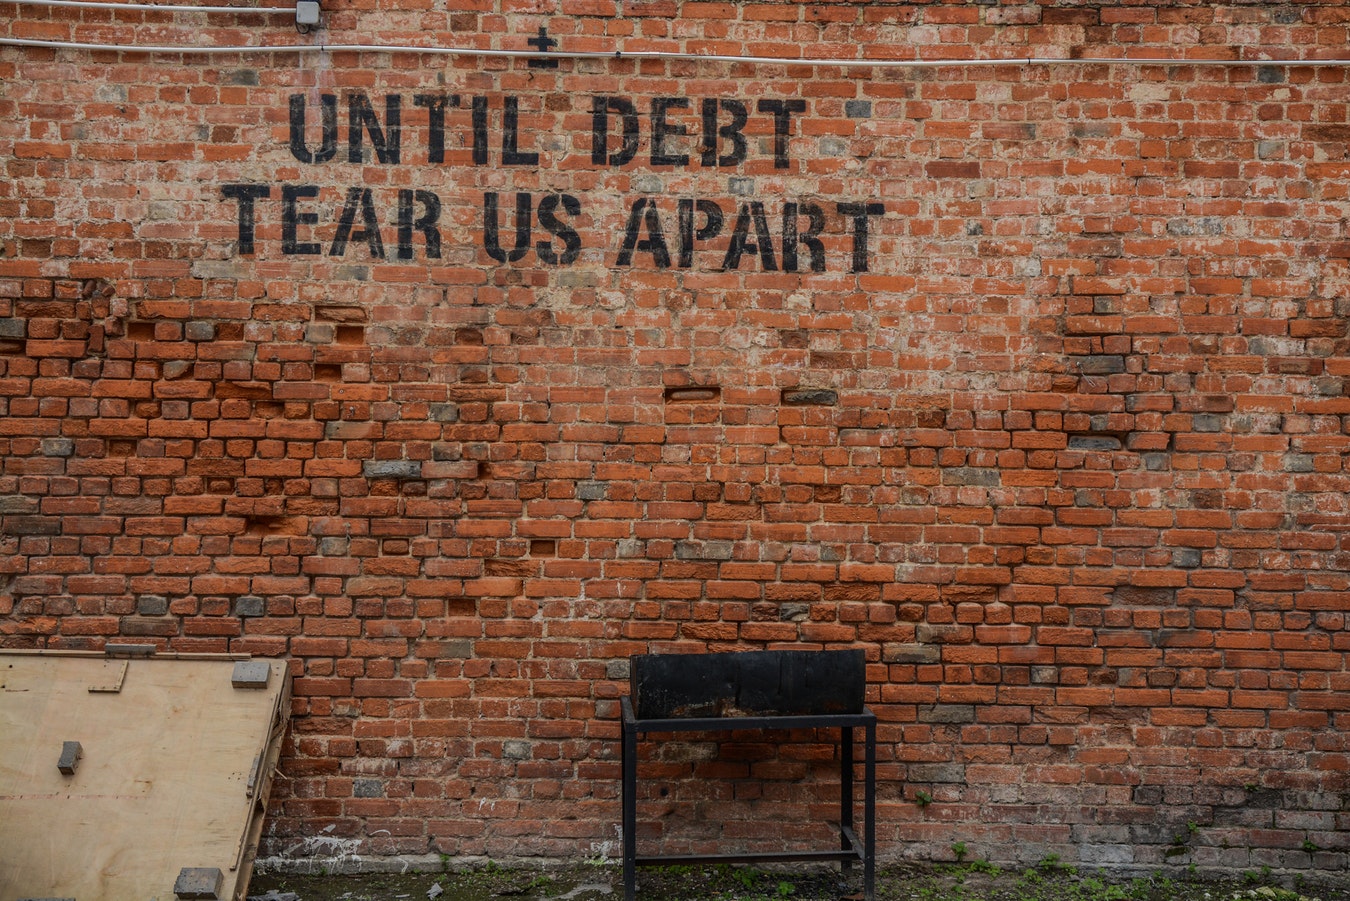 <i>Until debt tear us apart by <a href='https://unsplash.com/@stri_khedonia'>Alice Pasqual</a> on <a href='https://unsplash.com/photos/Olki5QpHxts'>Unsplash</a></i>